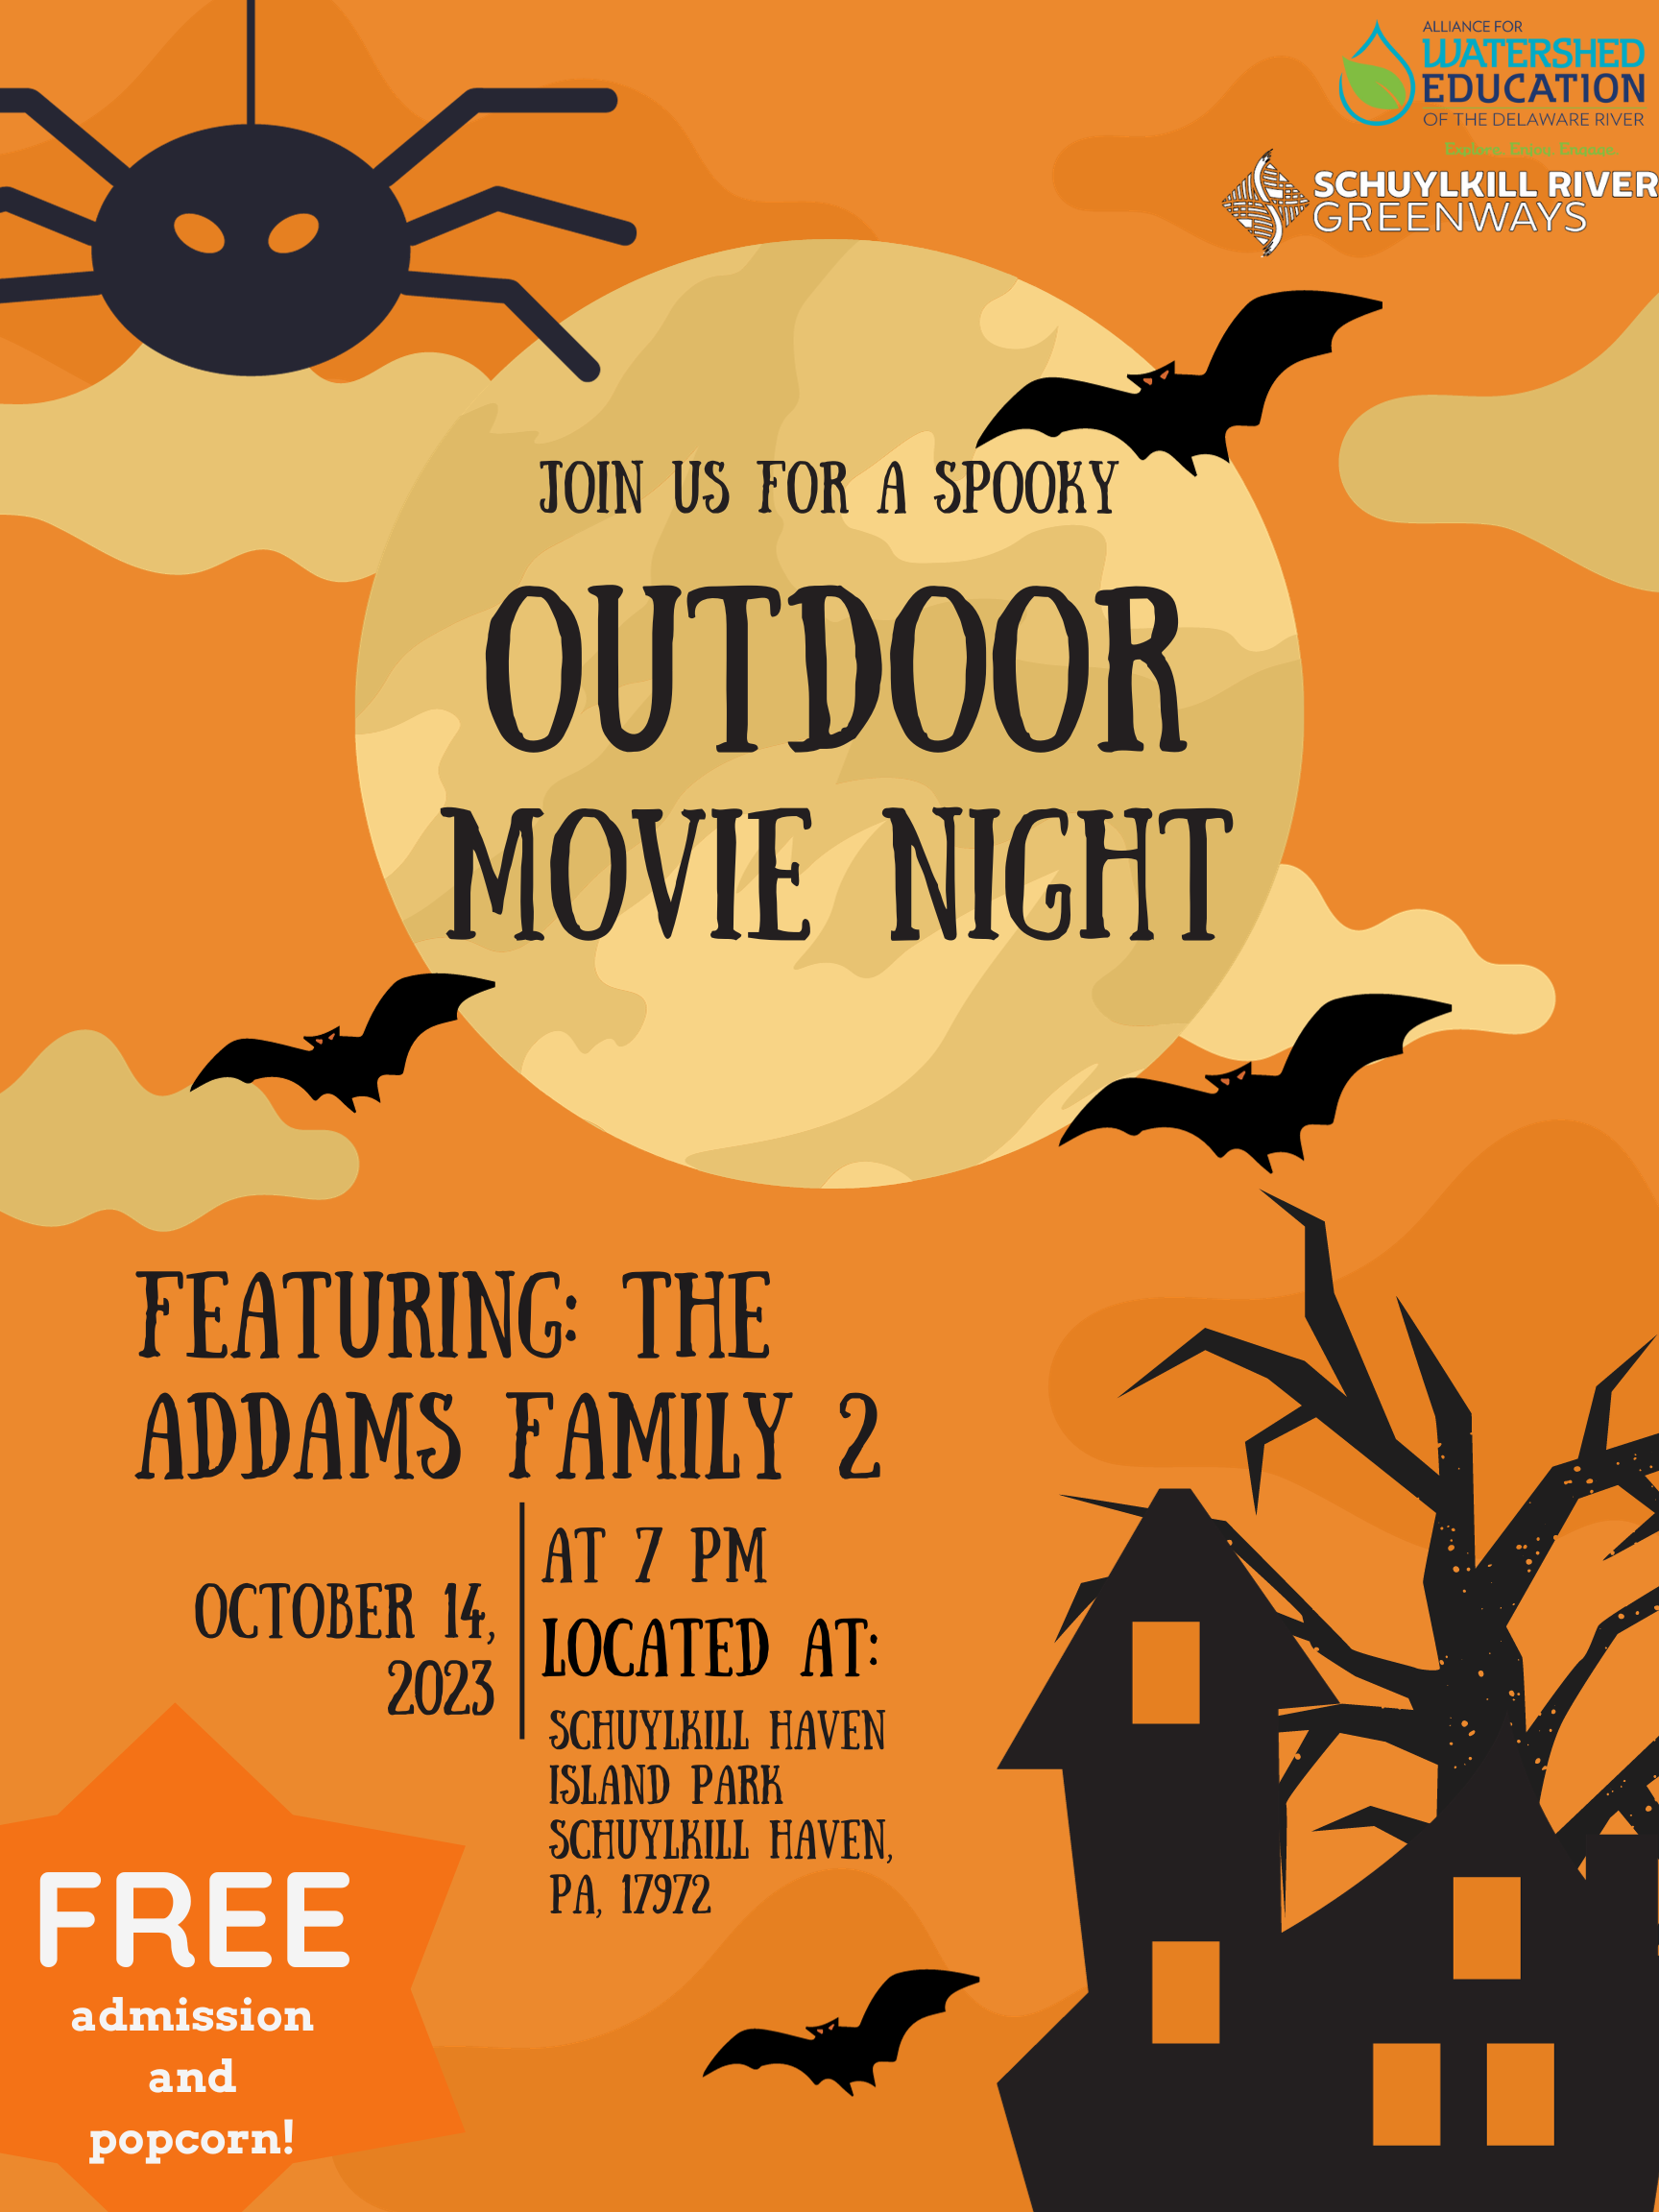 Free outdoor movie at Schuylkill Haven Island Park!